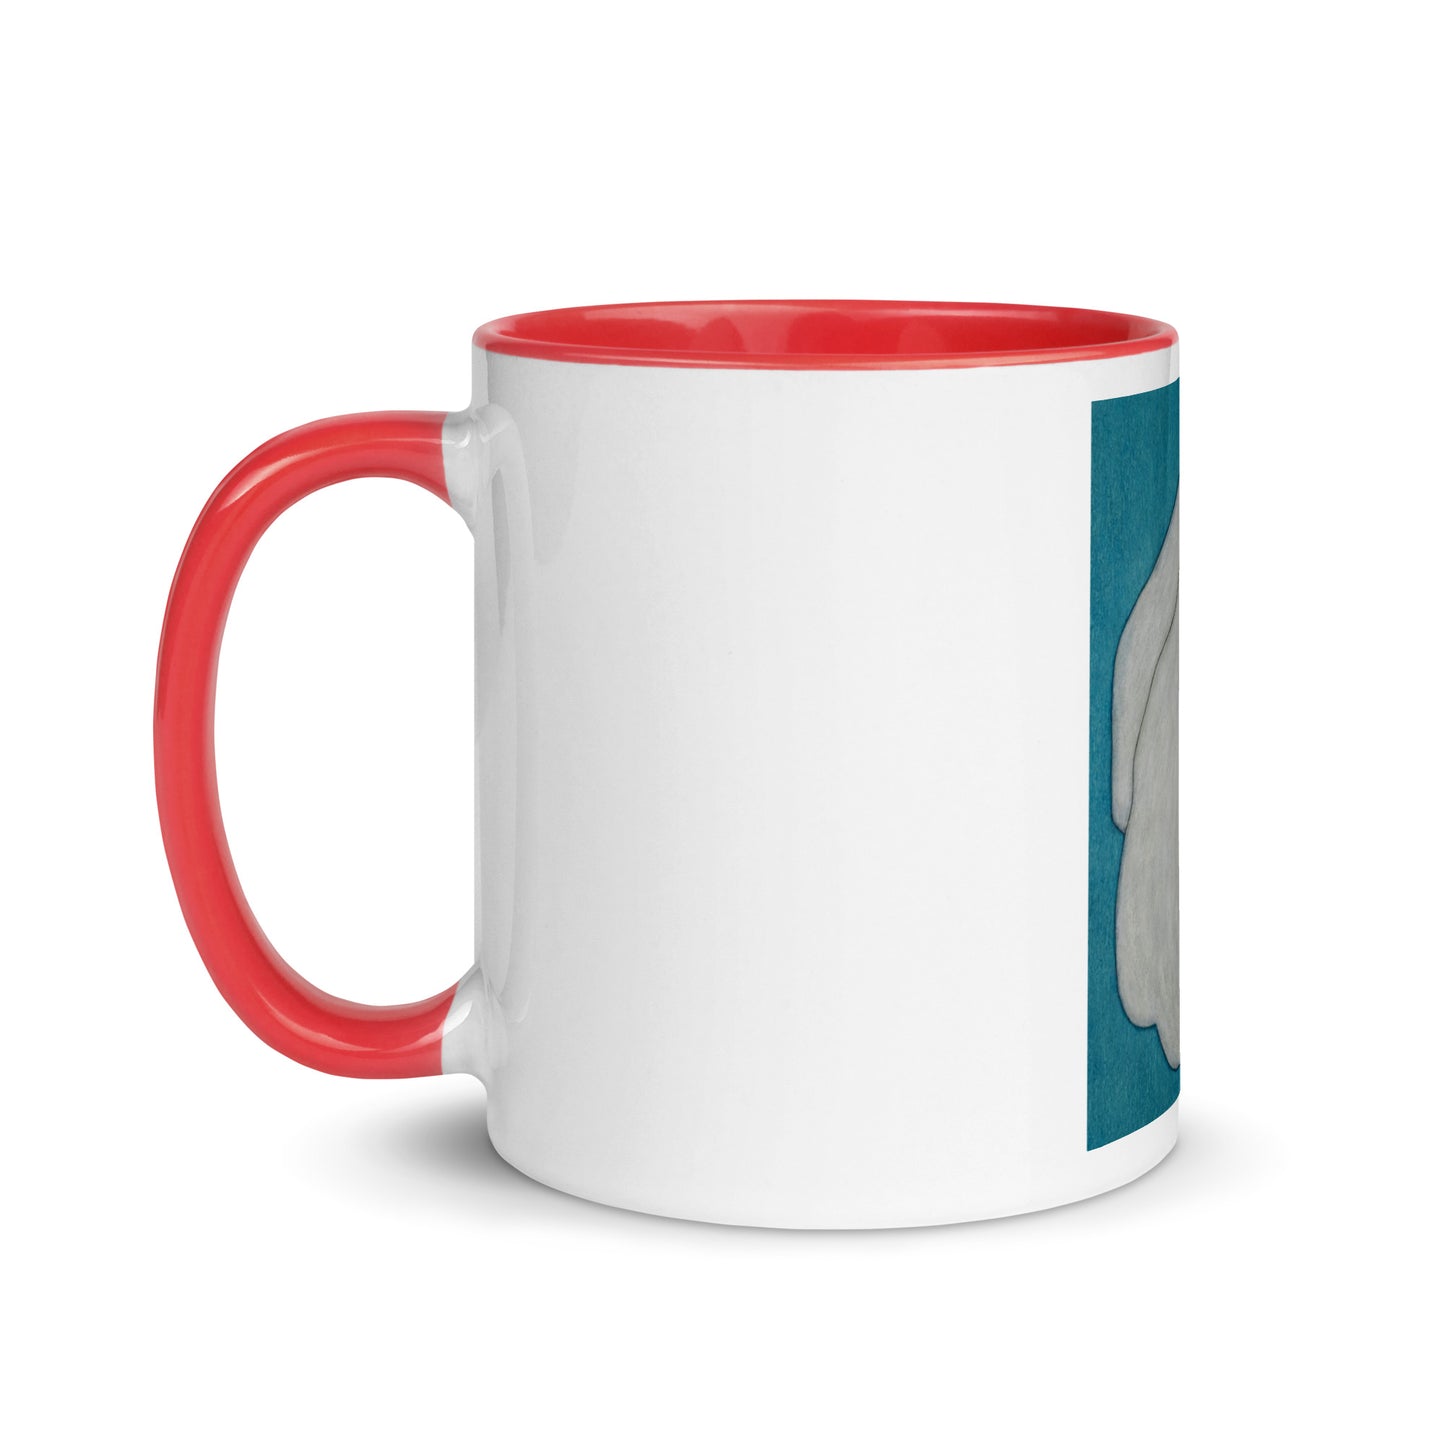 Tobi Kahn Collection - Mug with Color Inside